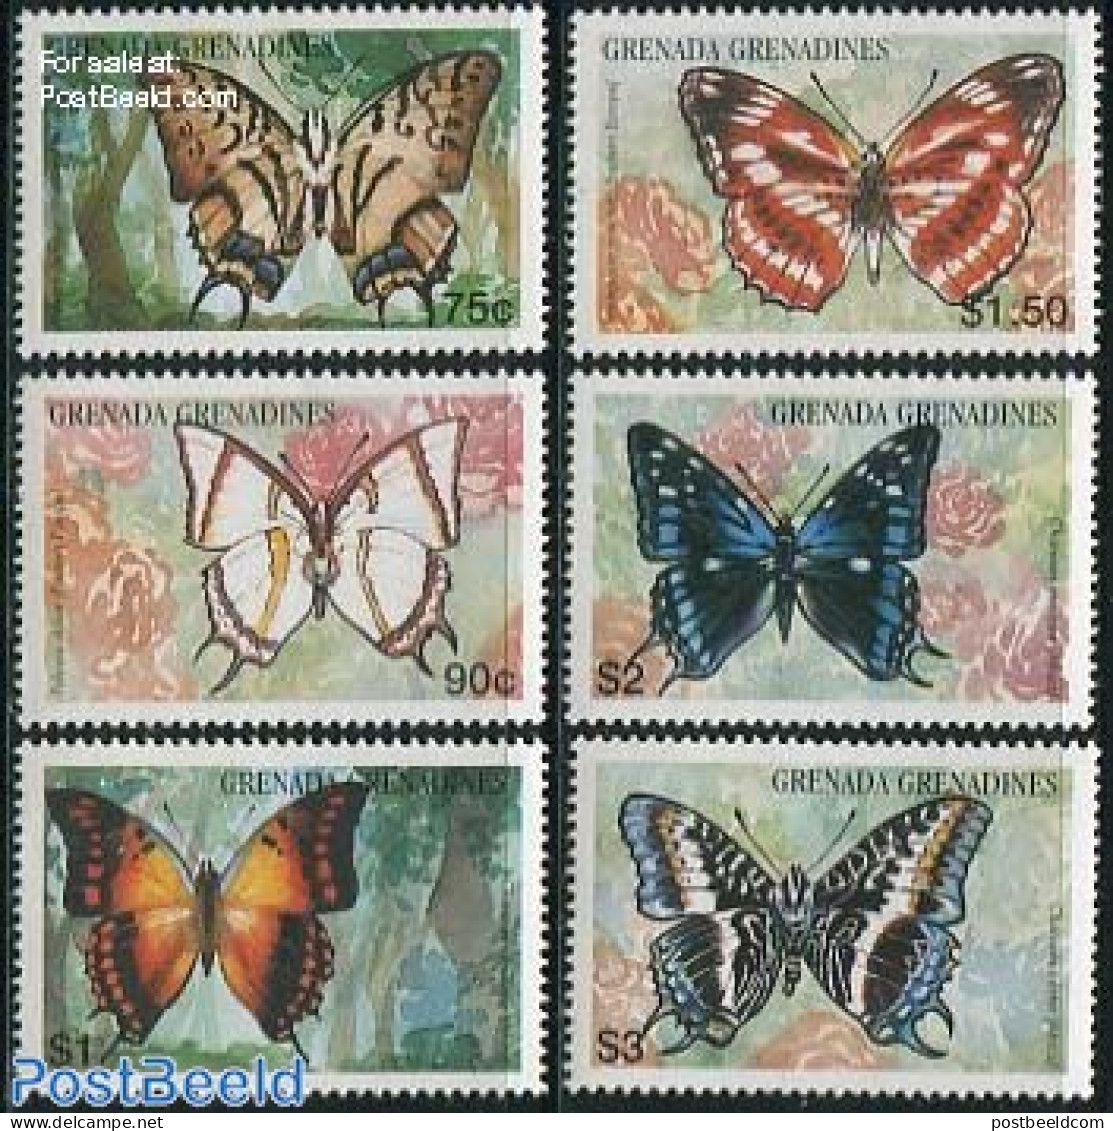 Grenada Grenadines 1997 Butterflies 6v, Mint NH, Nature - Butterflies - Grenada (1974-...)